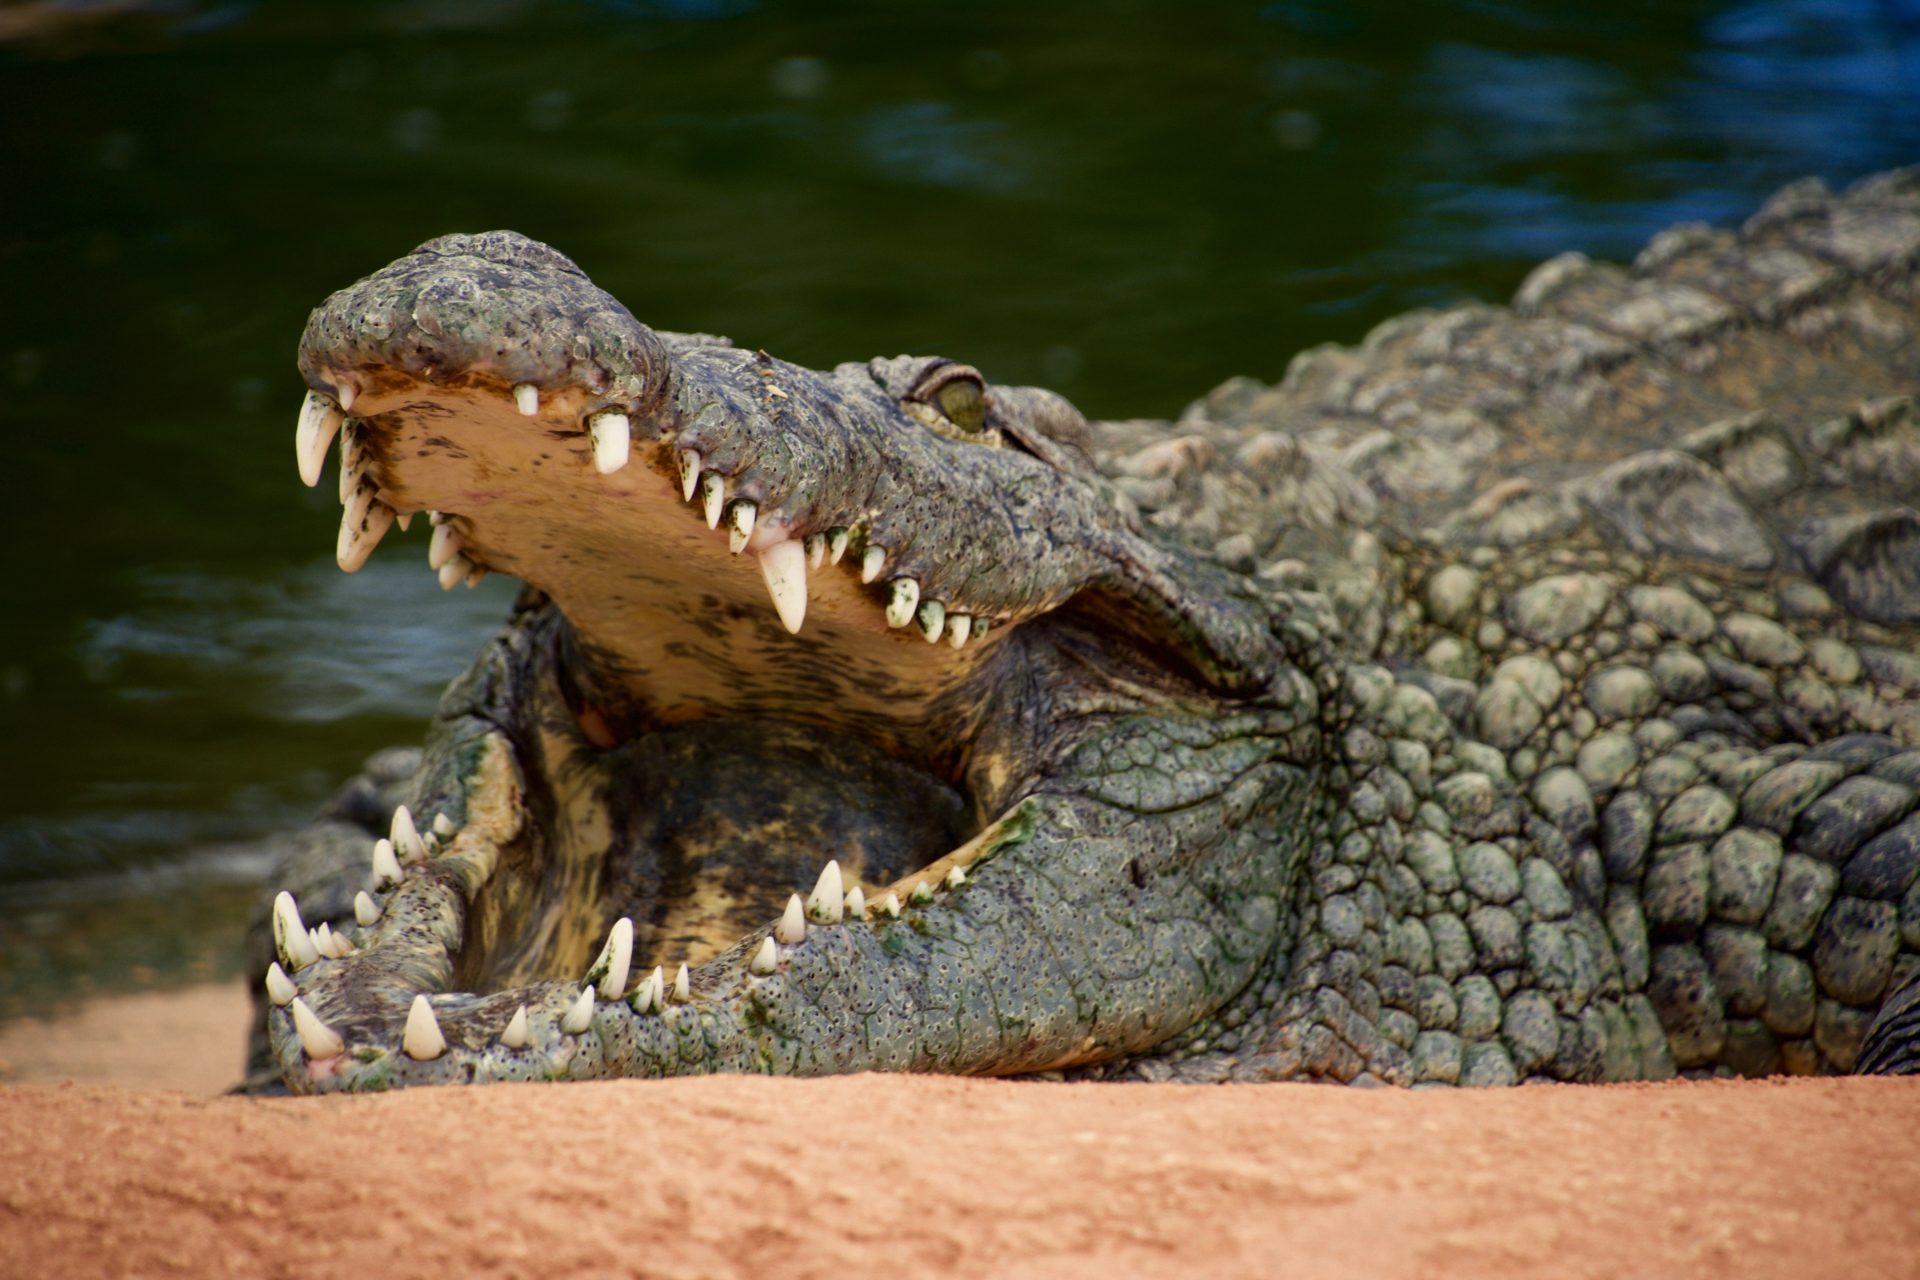 7. Crocodiles